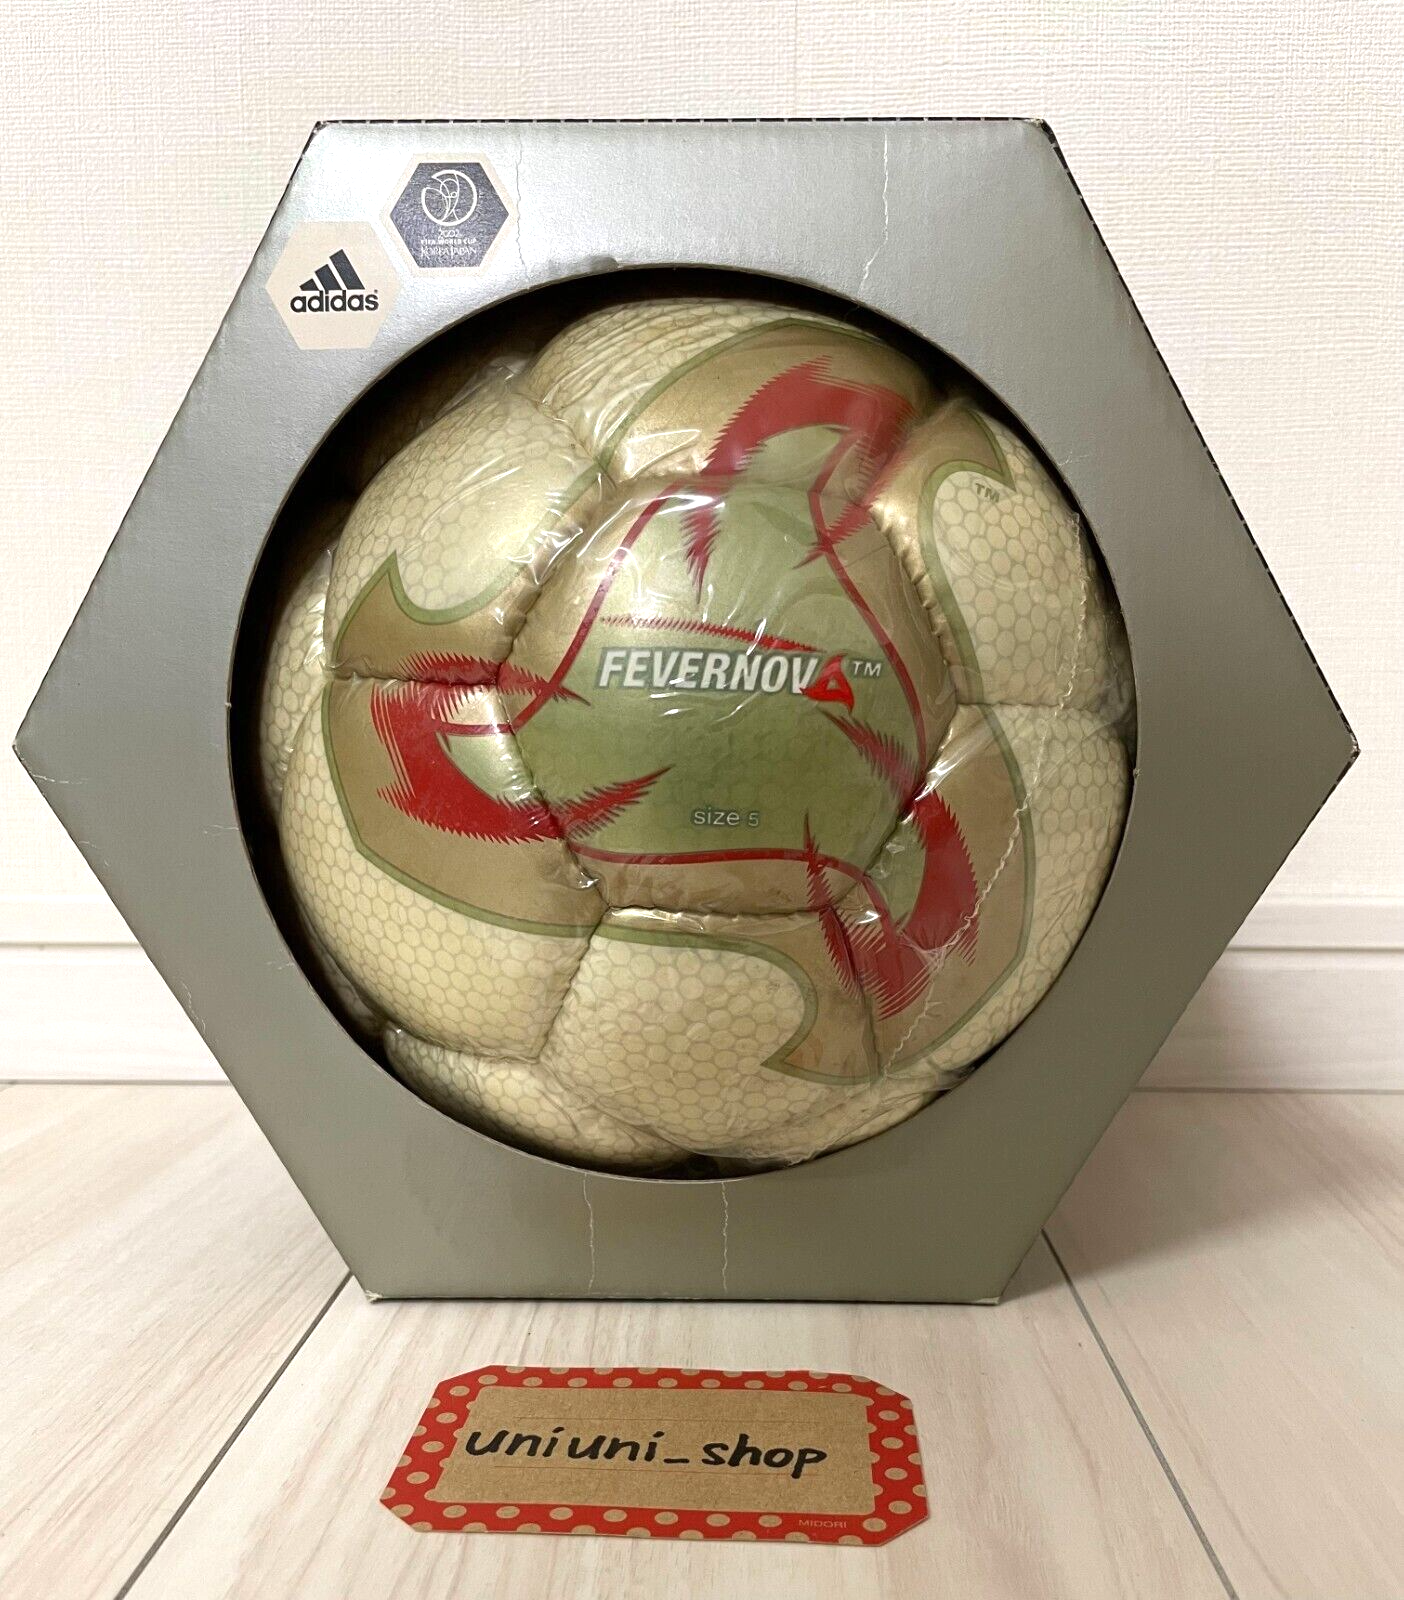 FIFA World Cup 2002 Official Match Ball Adidas Fevernova Football 